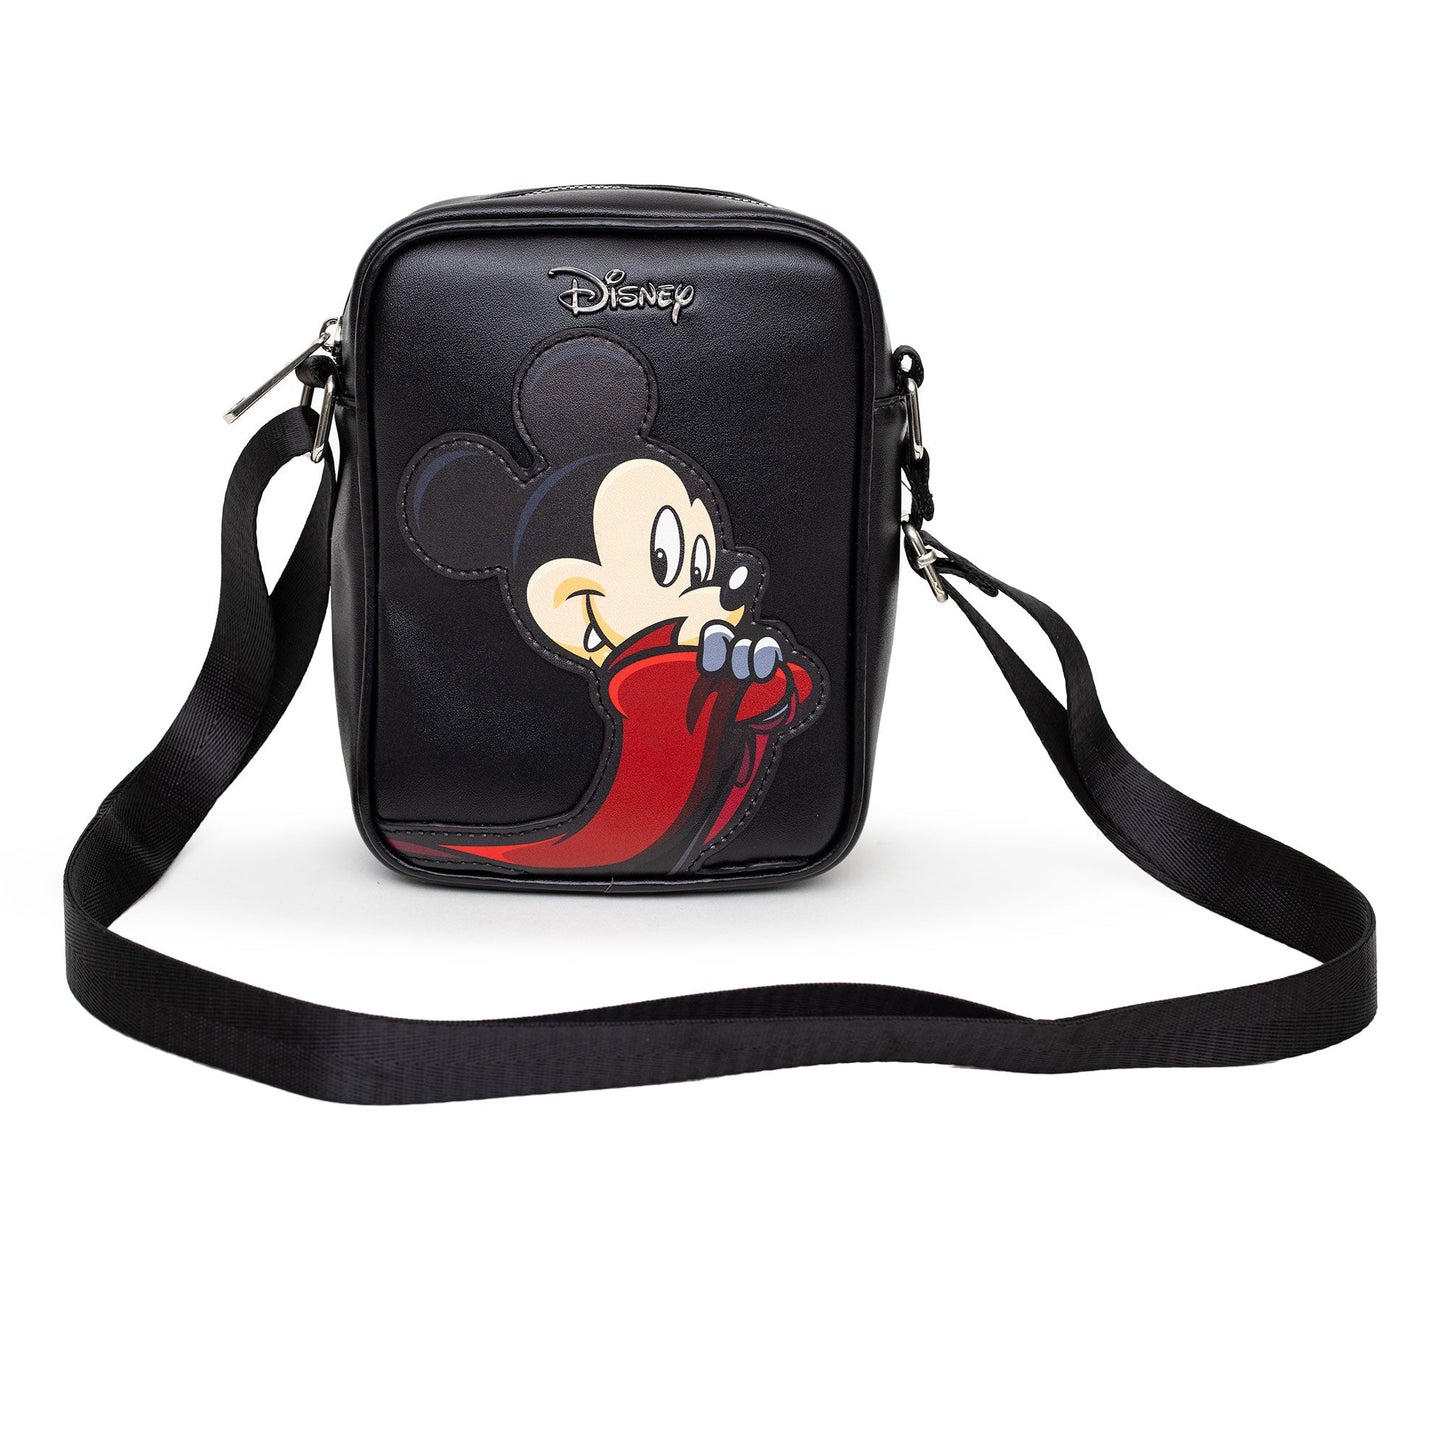 Disney Bag, Cross Body, Halloween Mickey Mouse and Pluto Dracula Poses Black, Vegan Leather